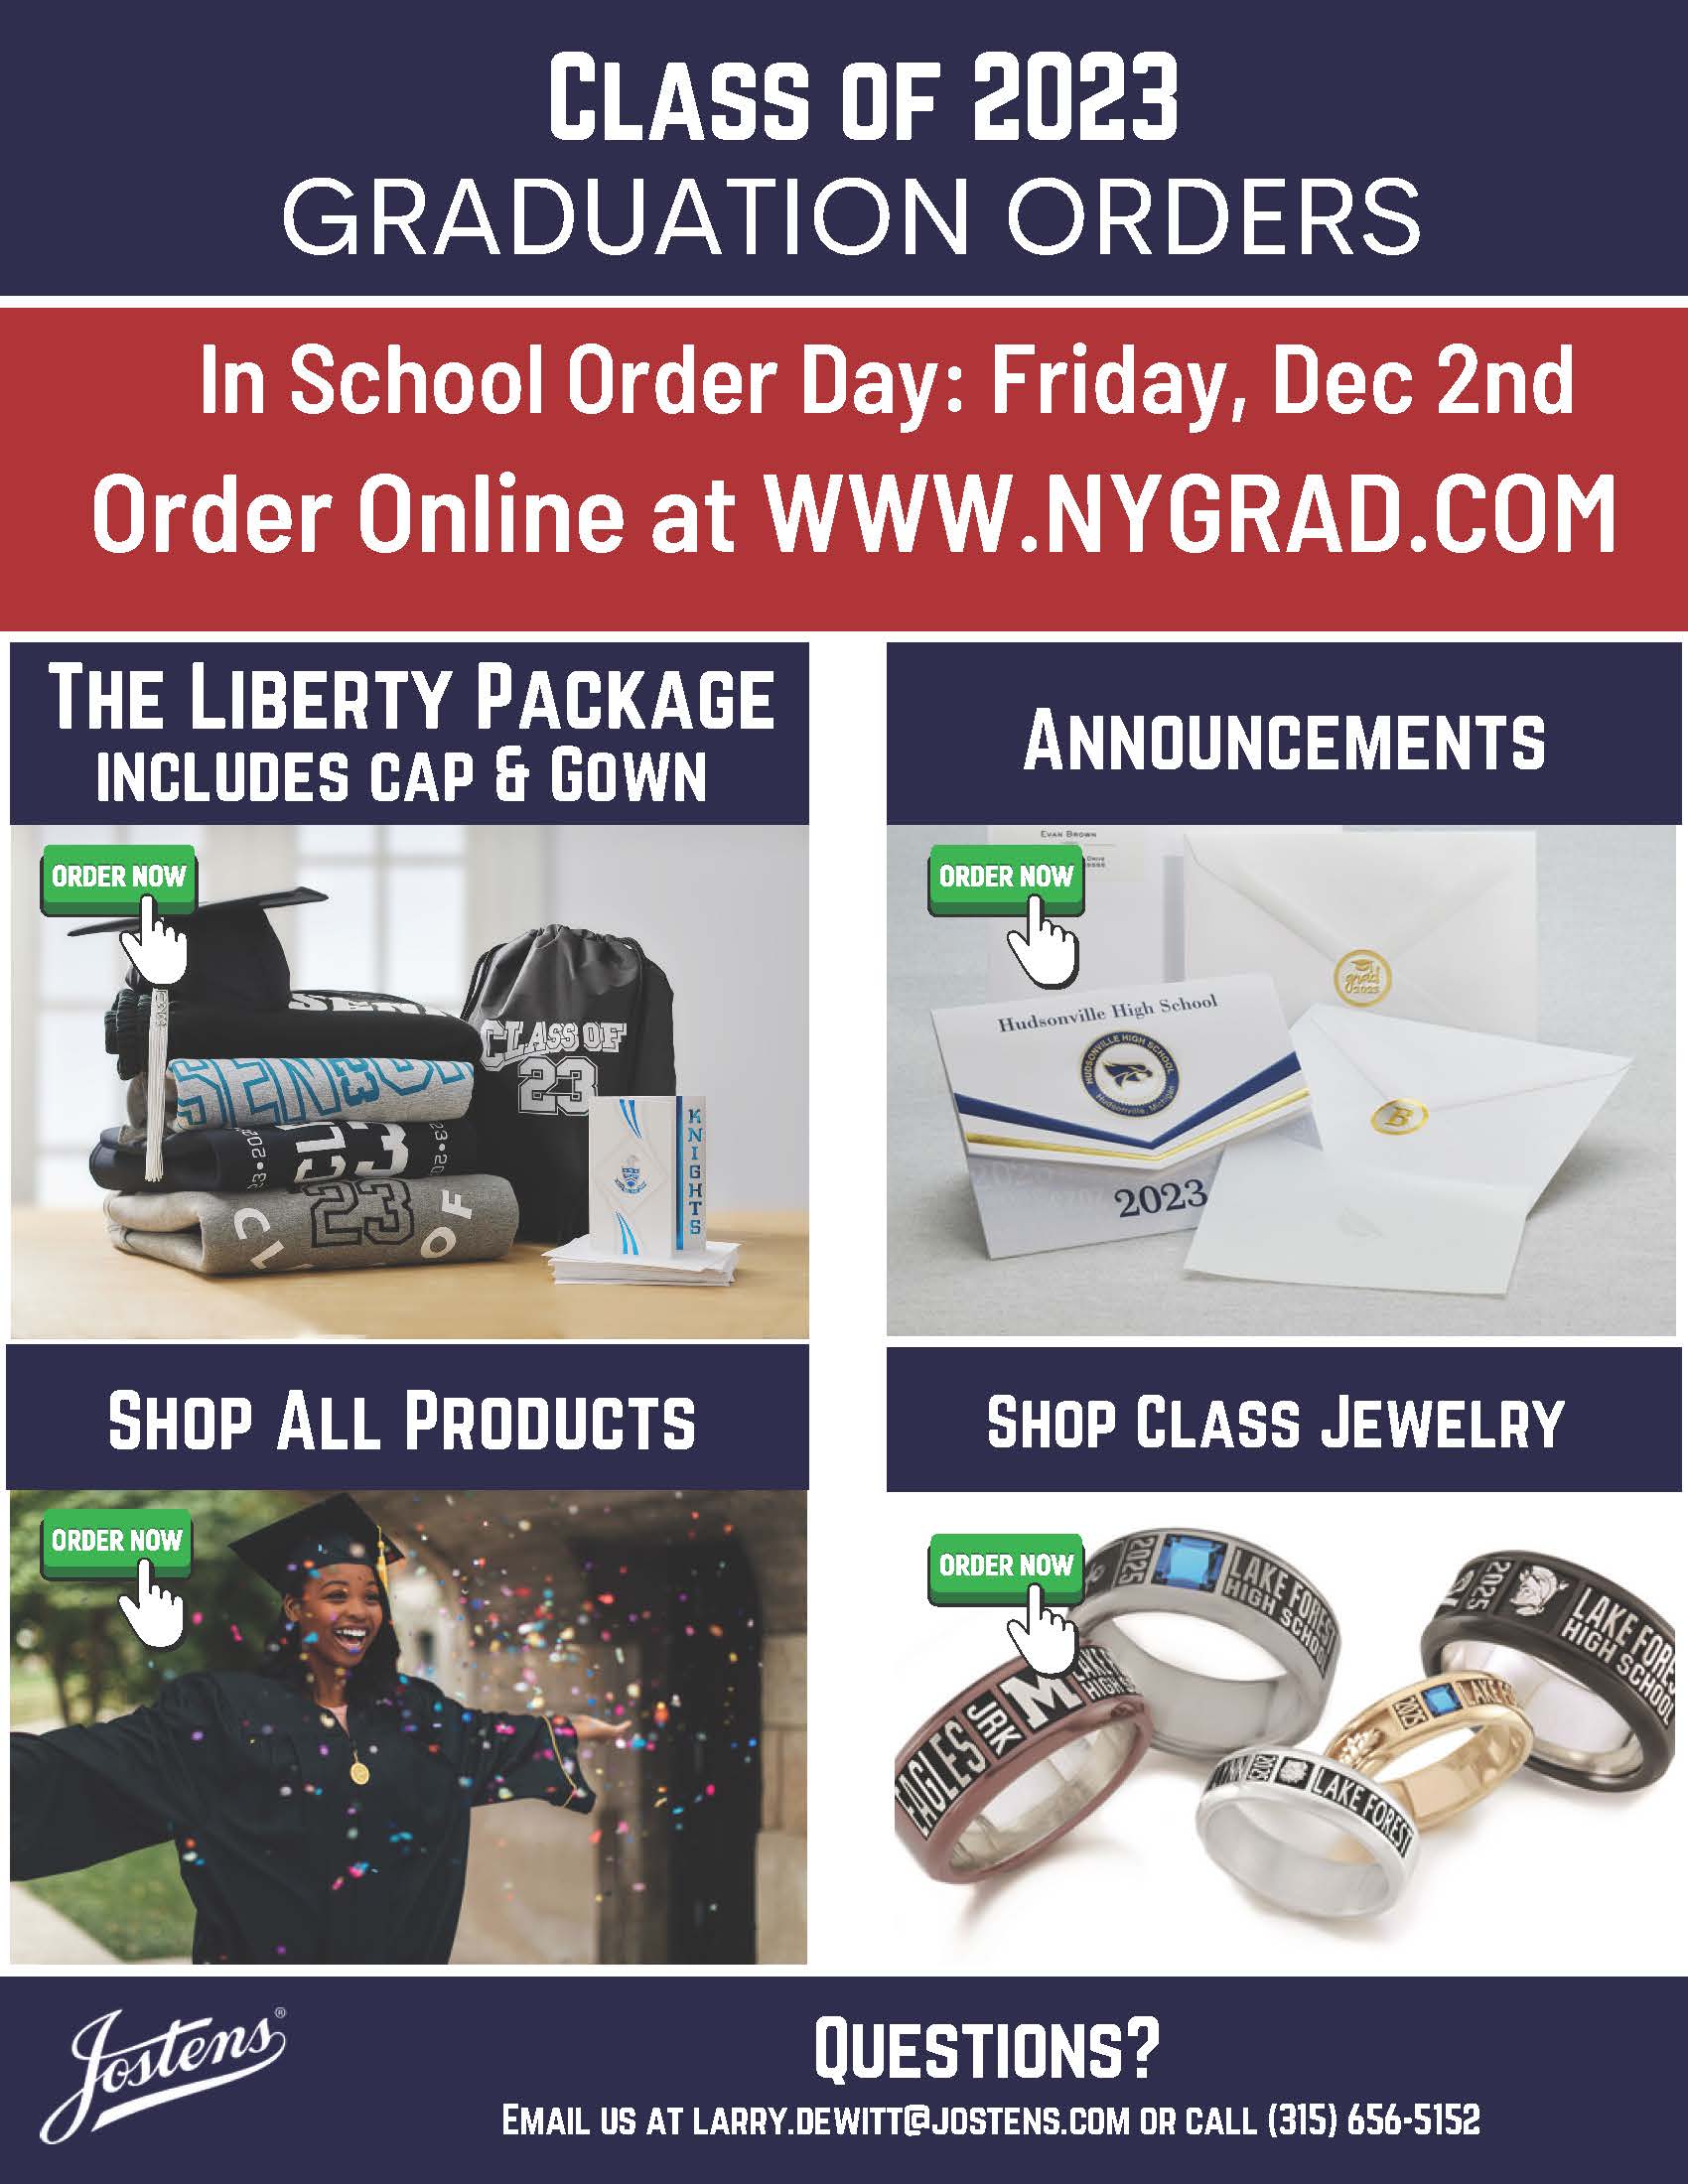 In-school graduation ordering is happening on Friday, December 2nd